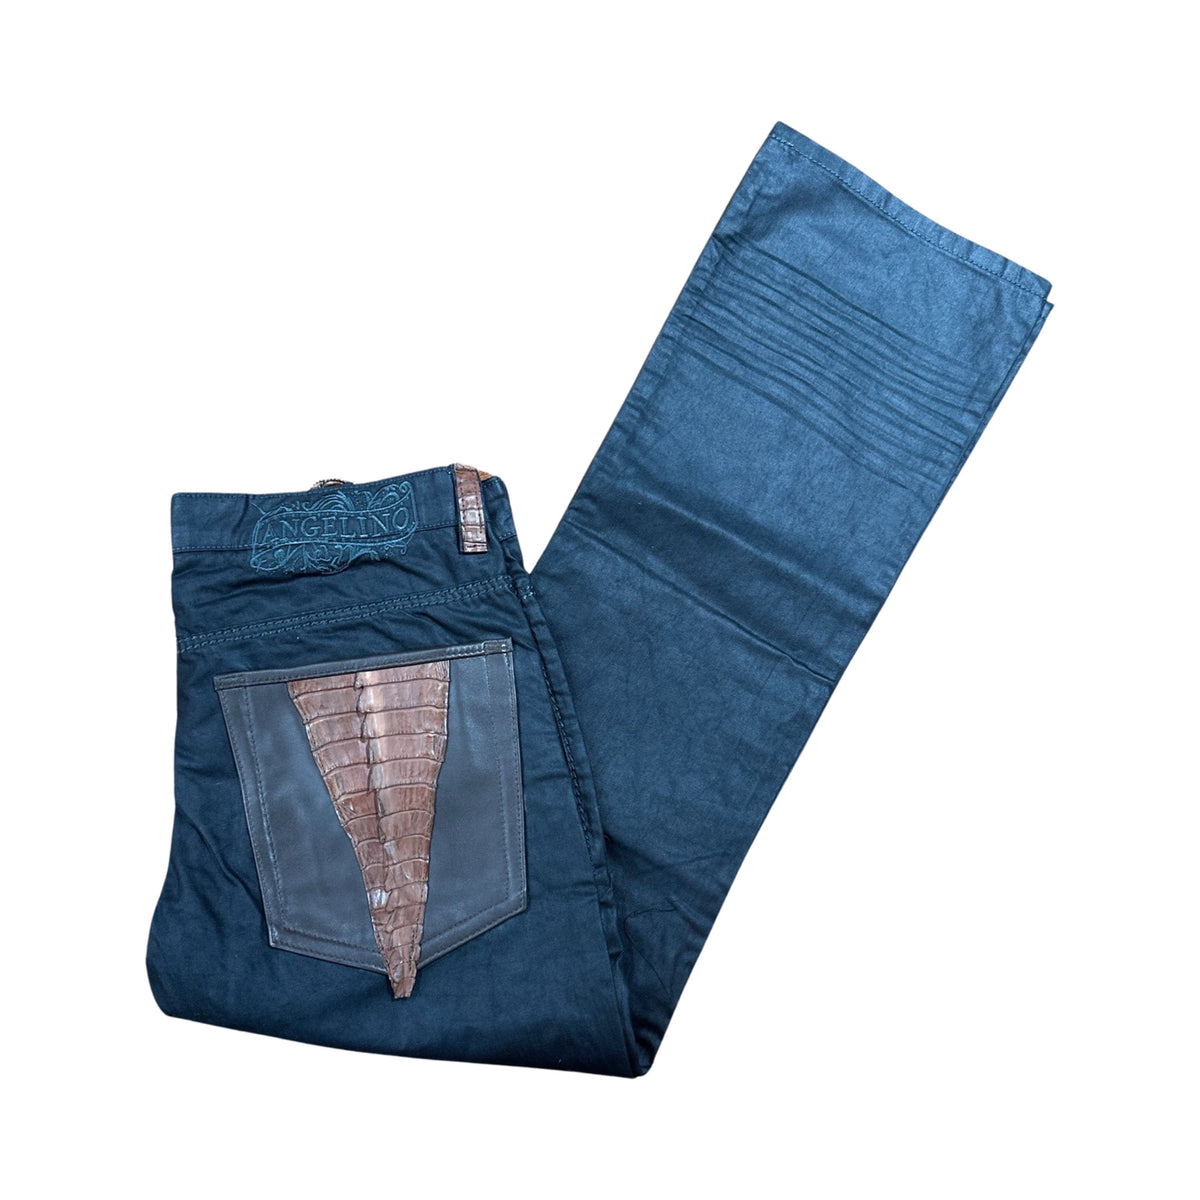 Kashani x Angelino Jeans w/ Brown Alligator Tail Pockets